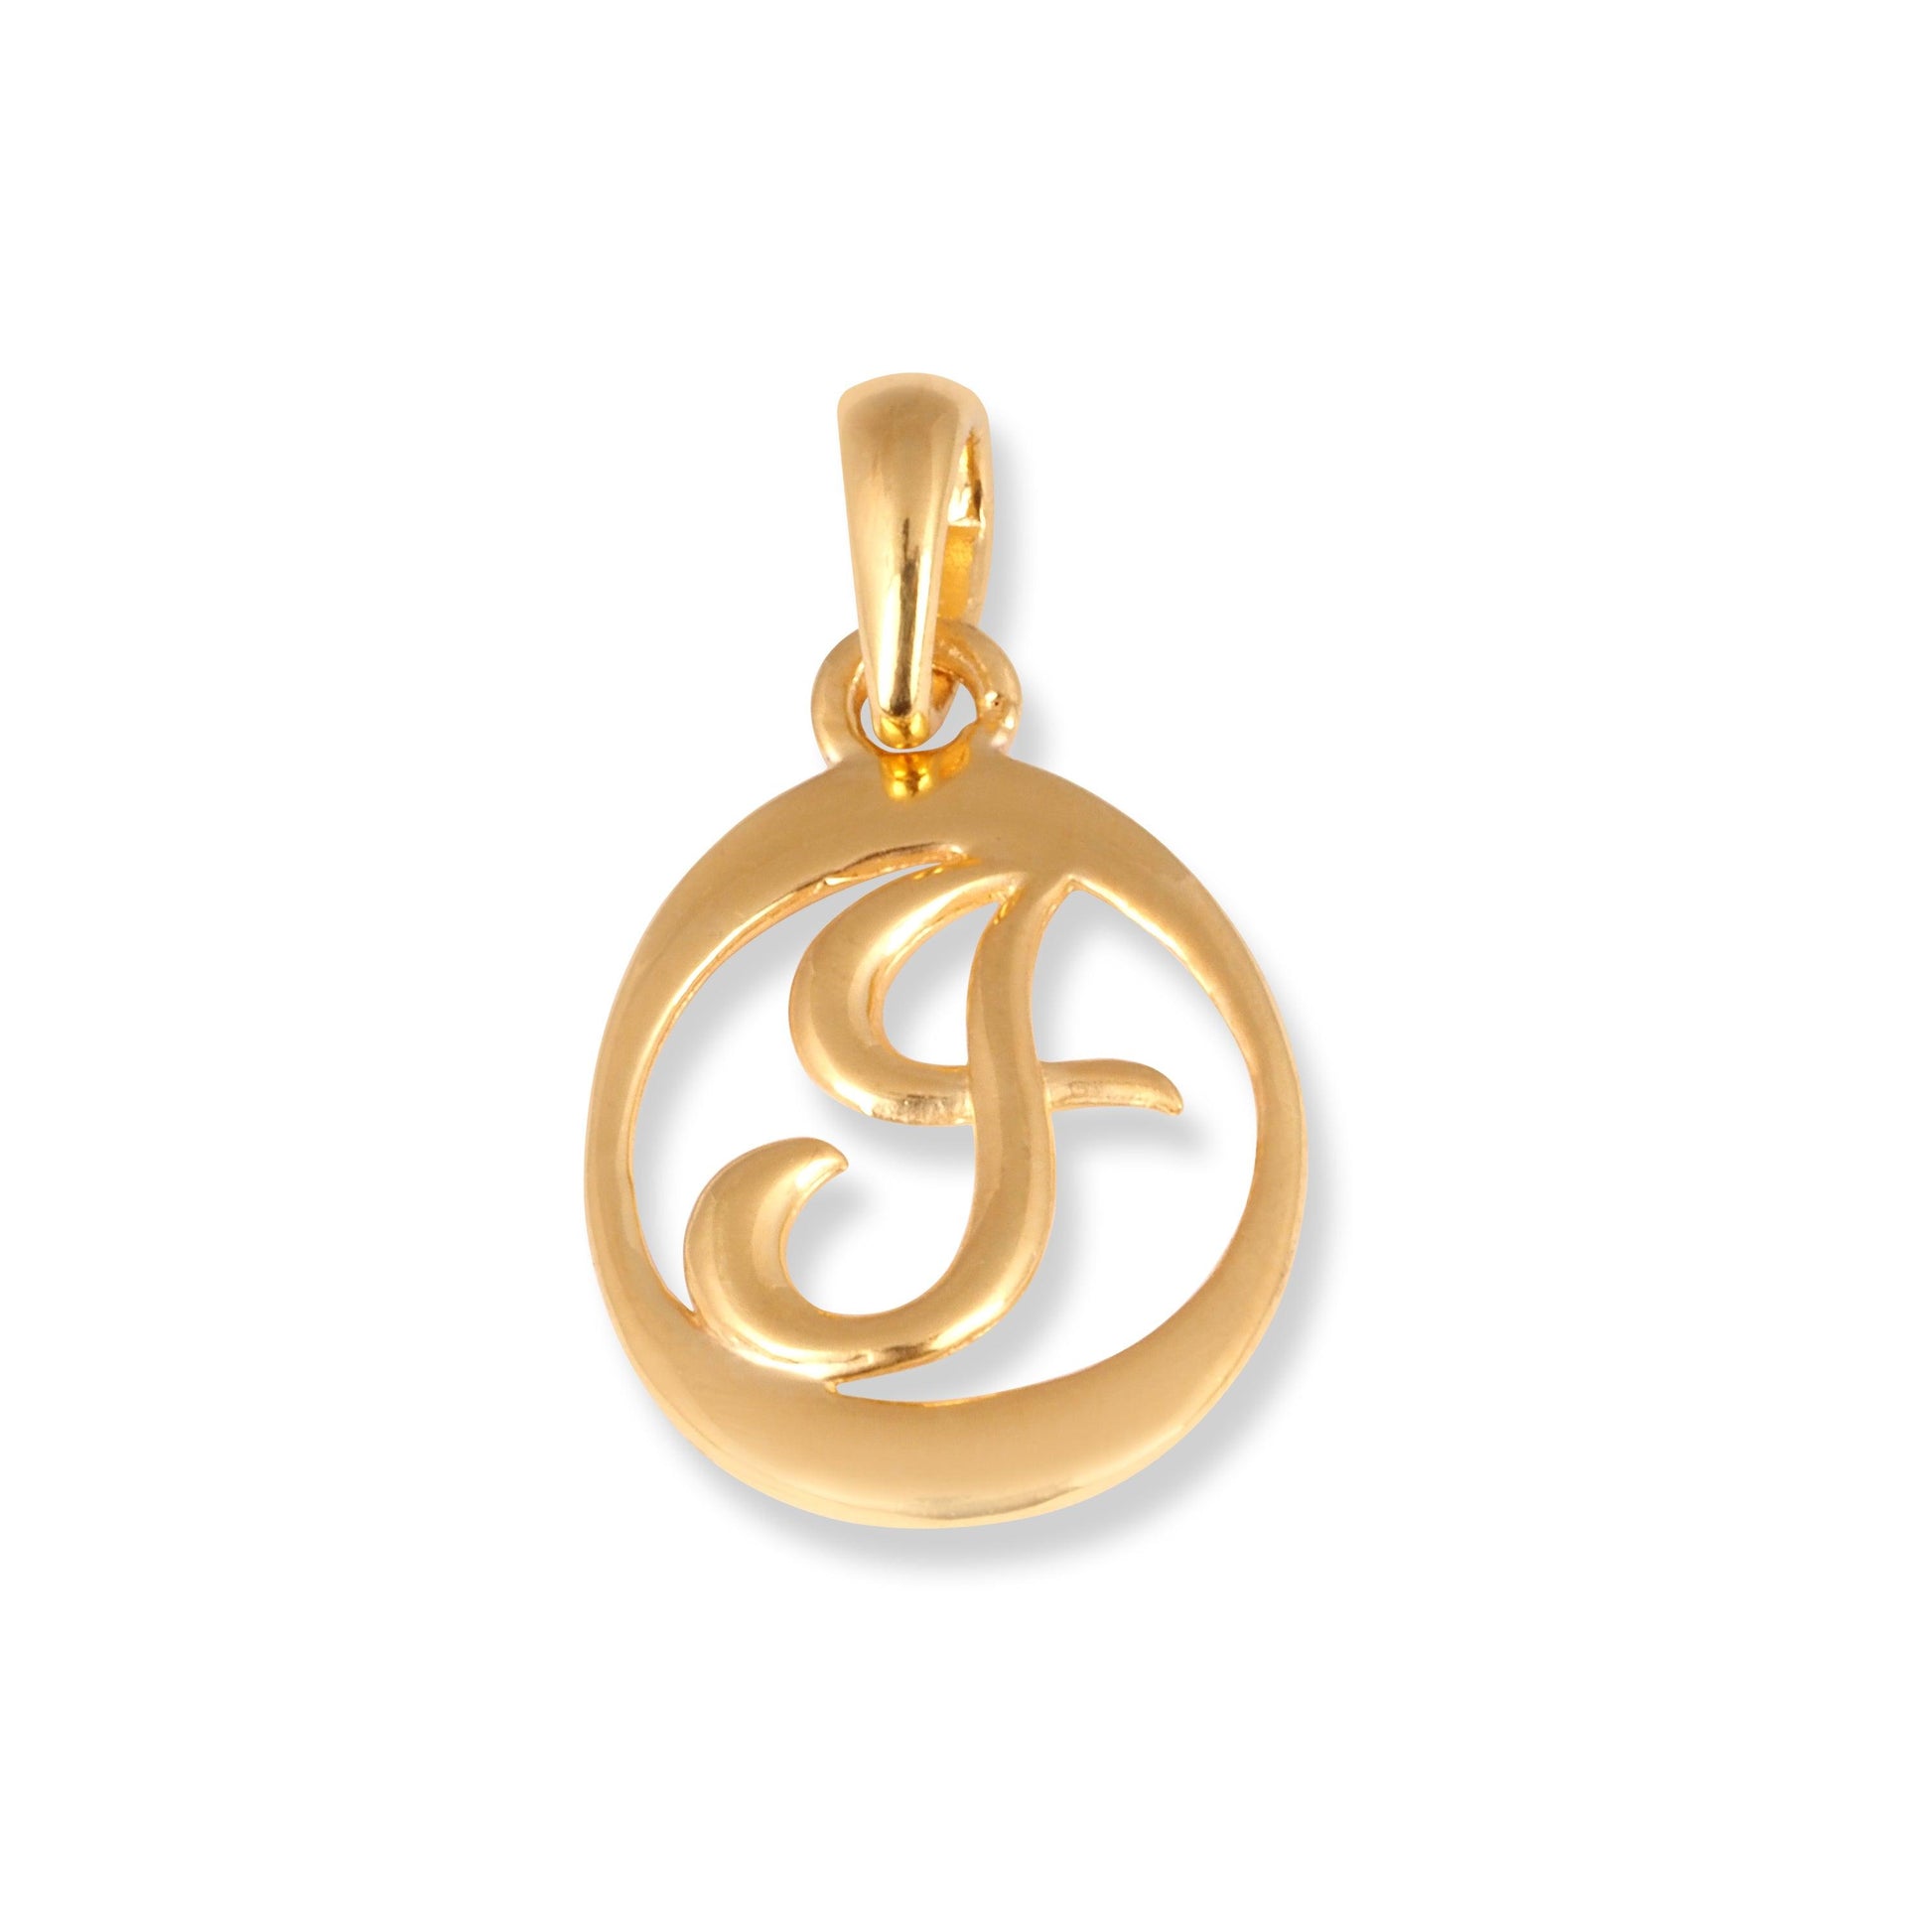 22ct Gold Initial 'J' Pendant P-7050-J - Minar Jewellers